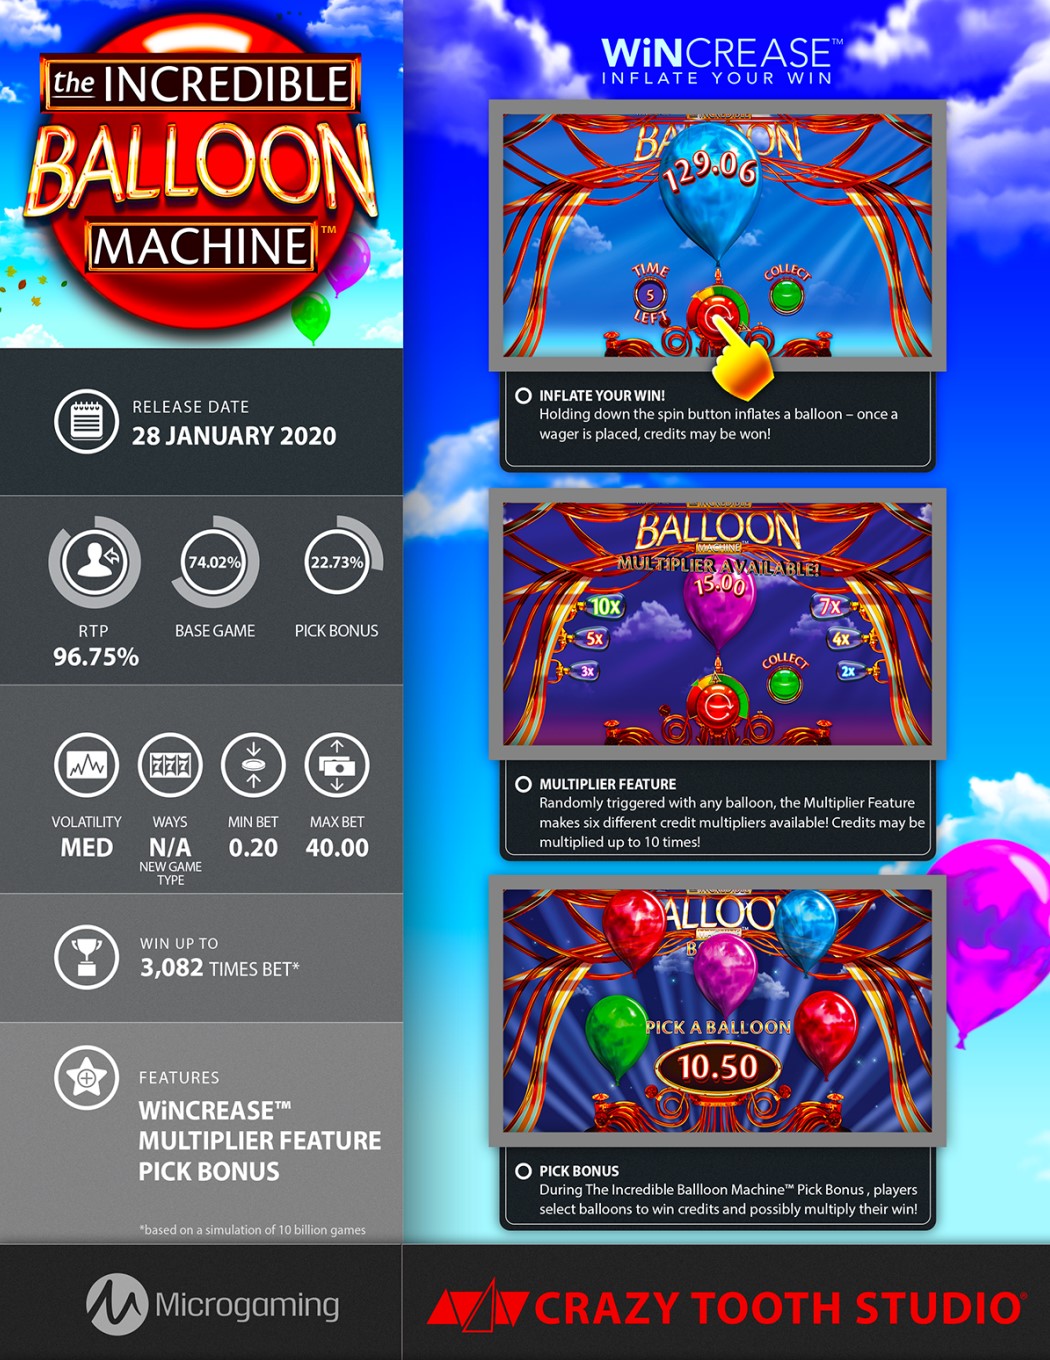 The Incredible Balloon Machine Game Info